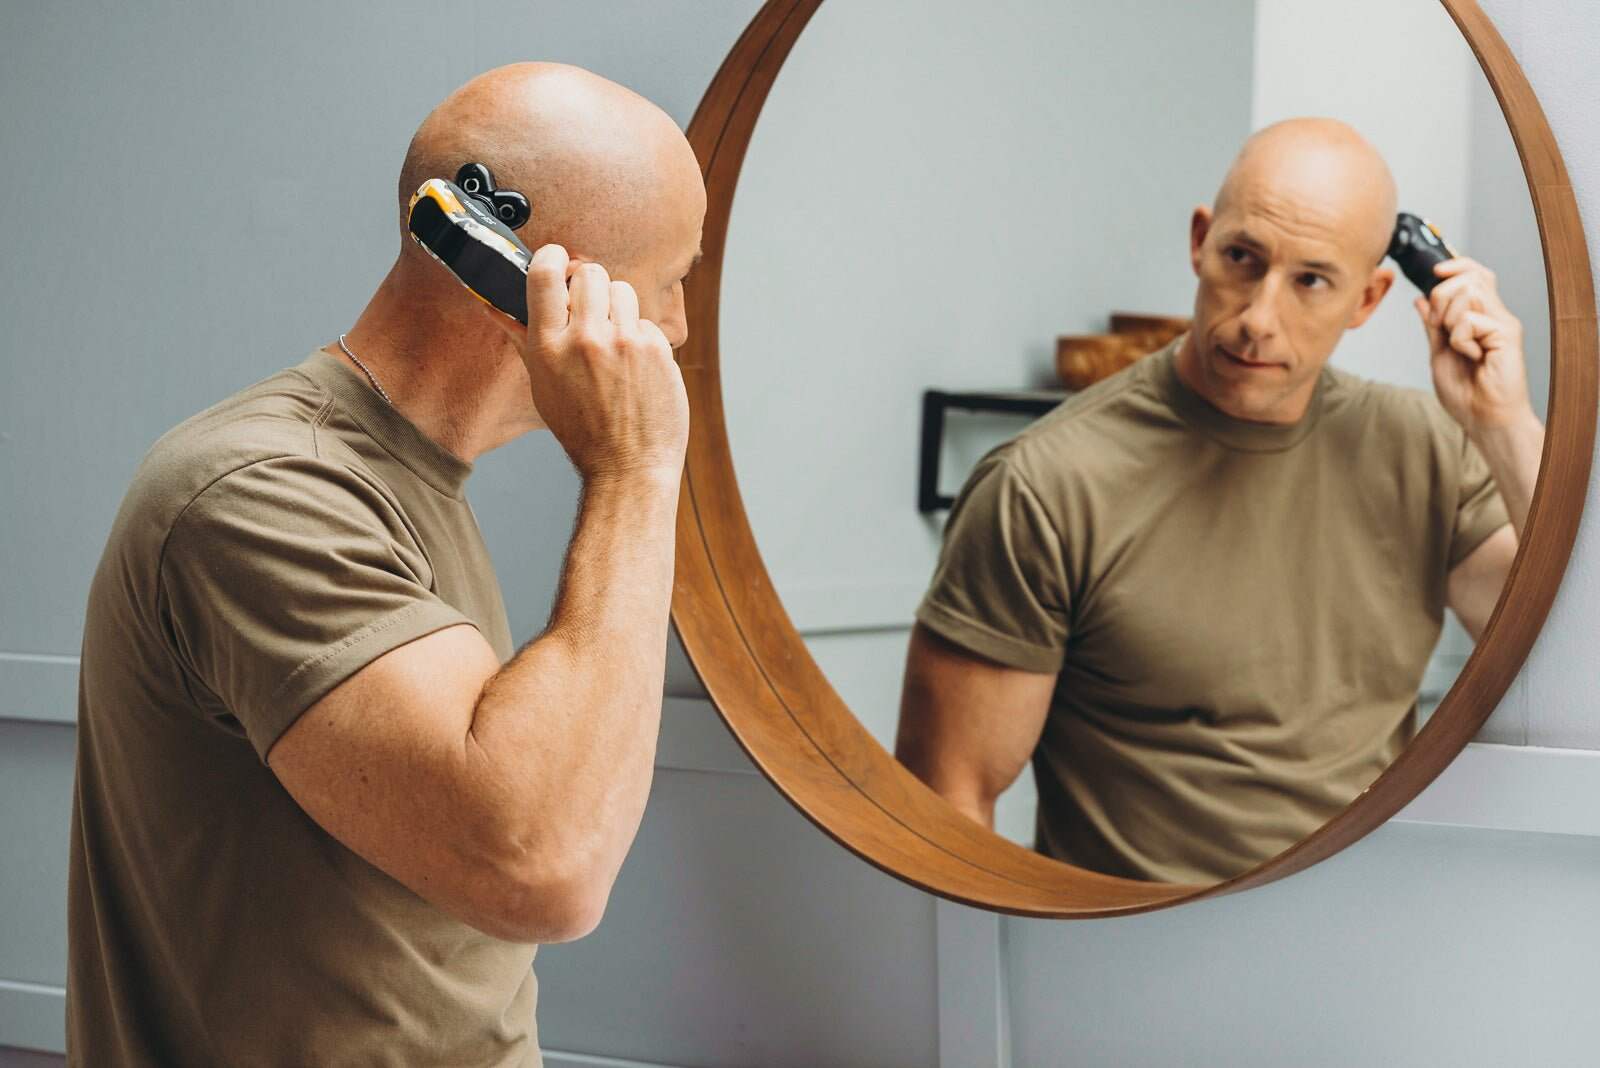 Bald Buddy - Ergonomic Bald Shaver – The Cut Buddy